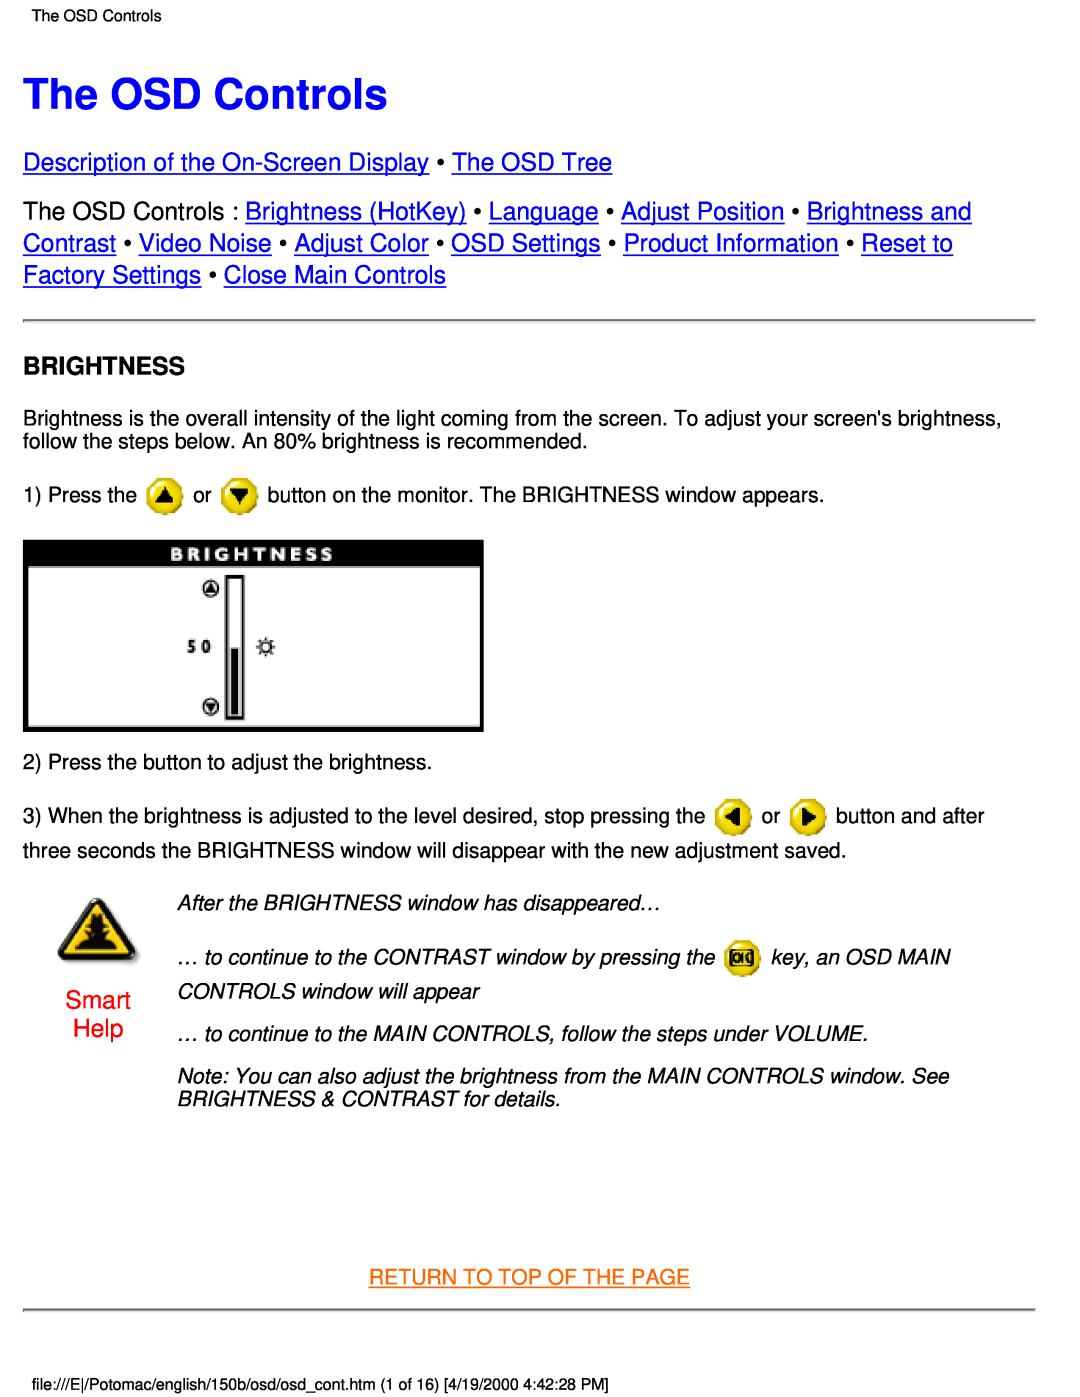 Philips 150B The OSD Controls, Description of the On-Screen Display The OSD Tree, Brightness, Smart Help, key, an OSD MAIN 